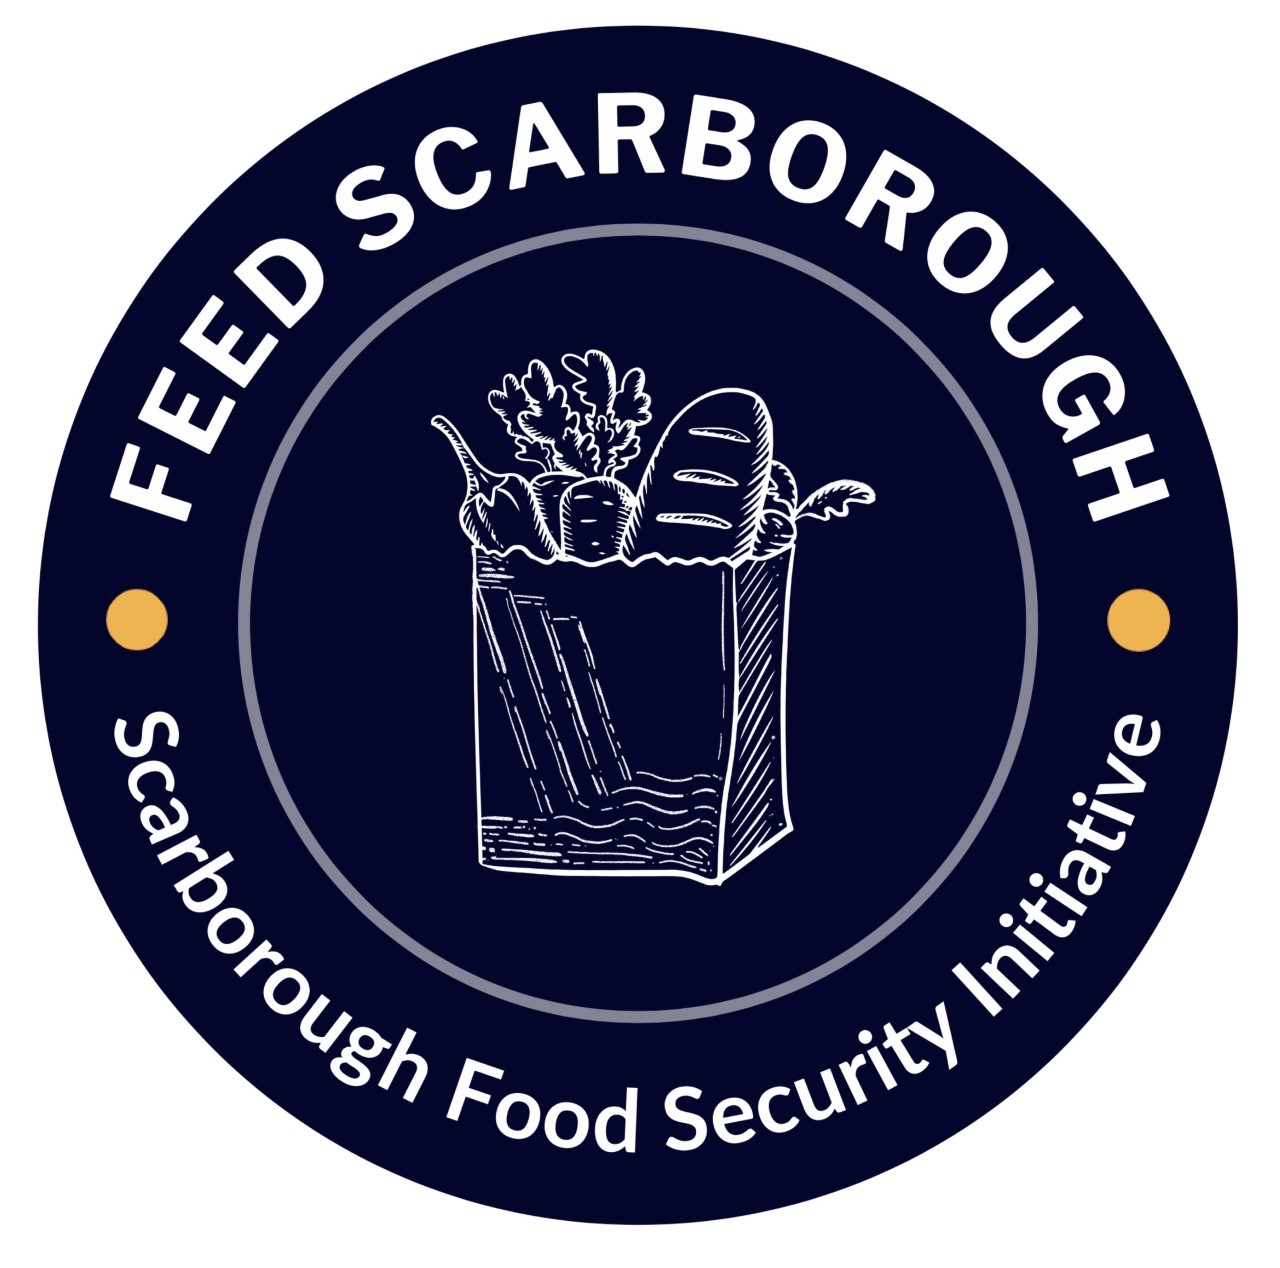 Scarborough Food Security Initiative logo